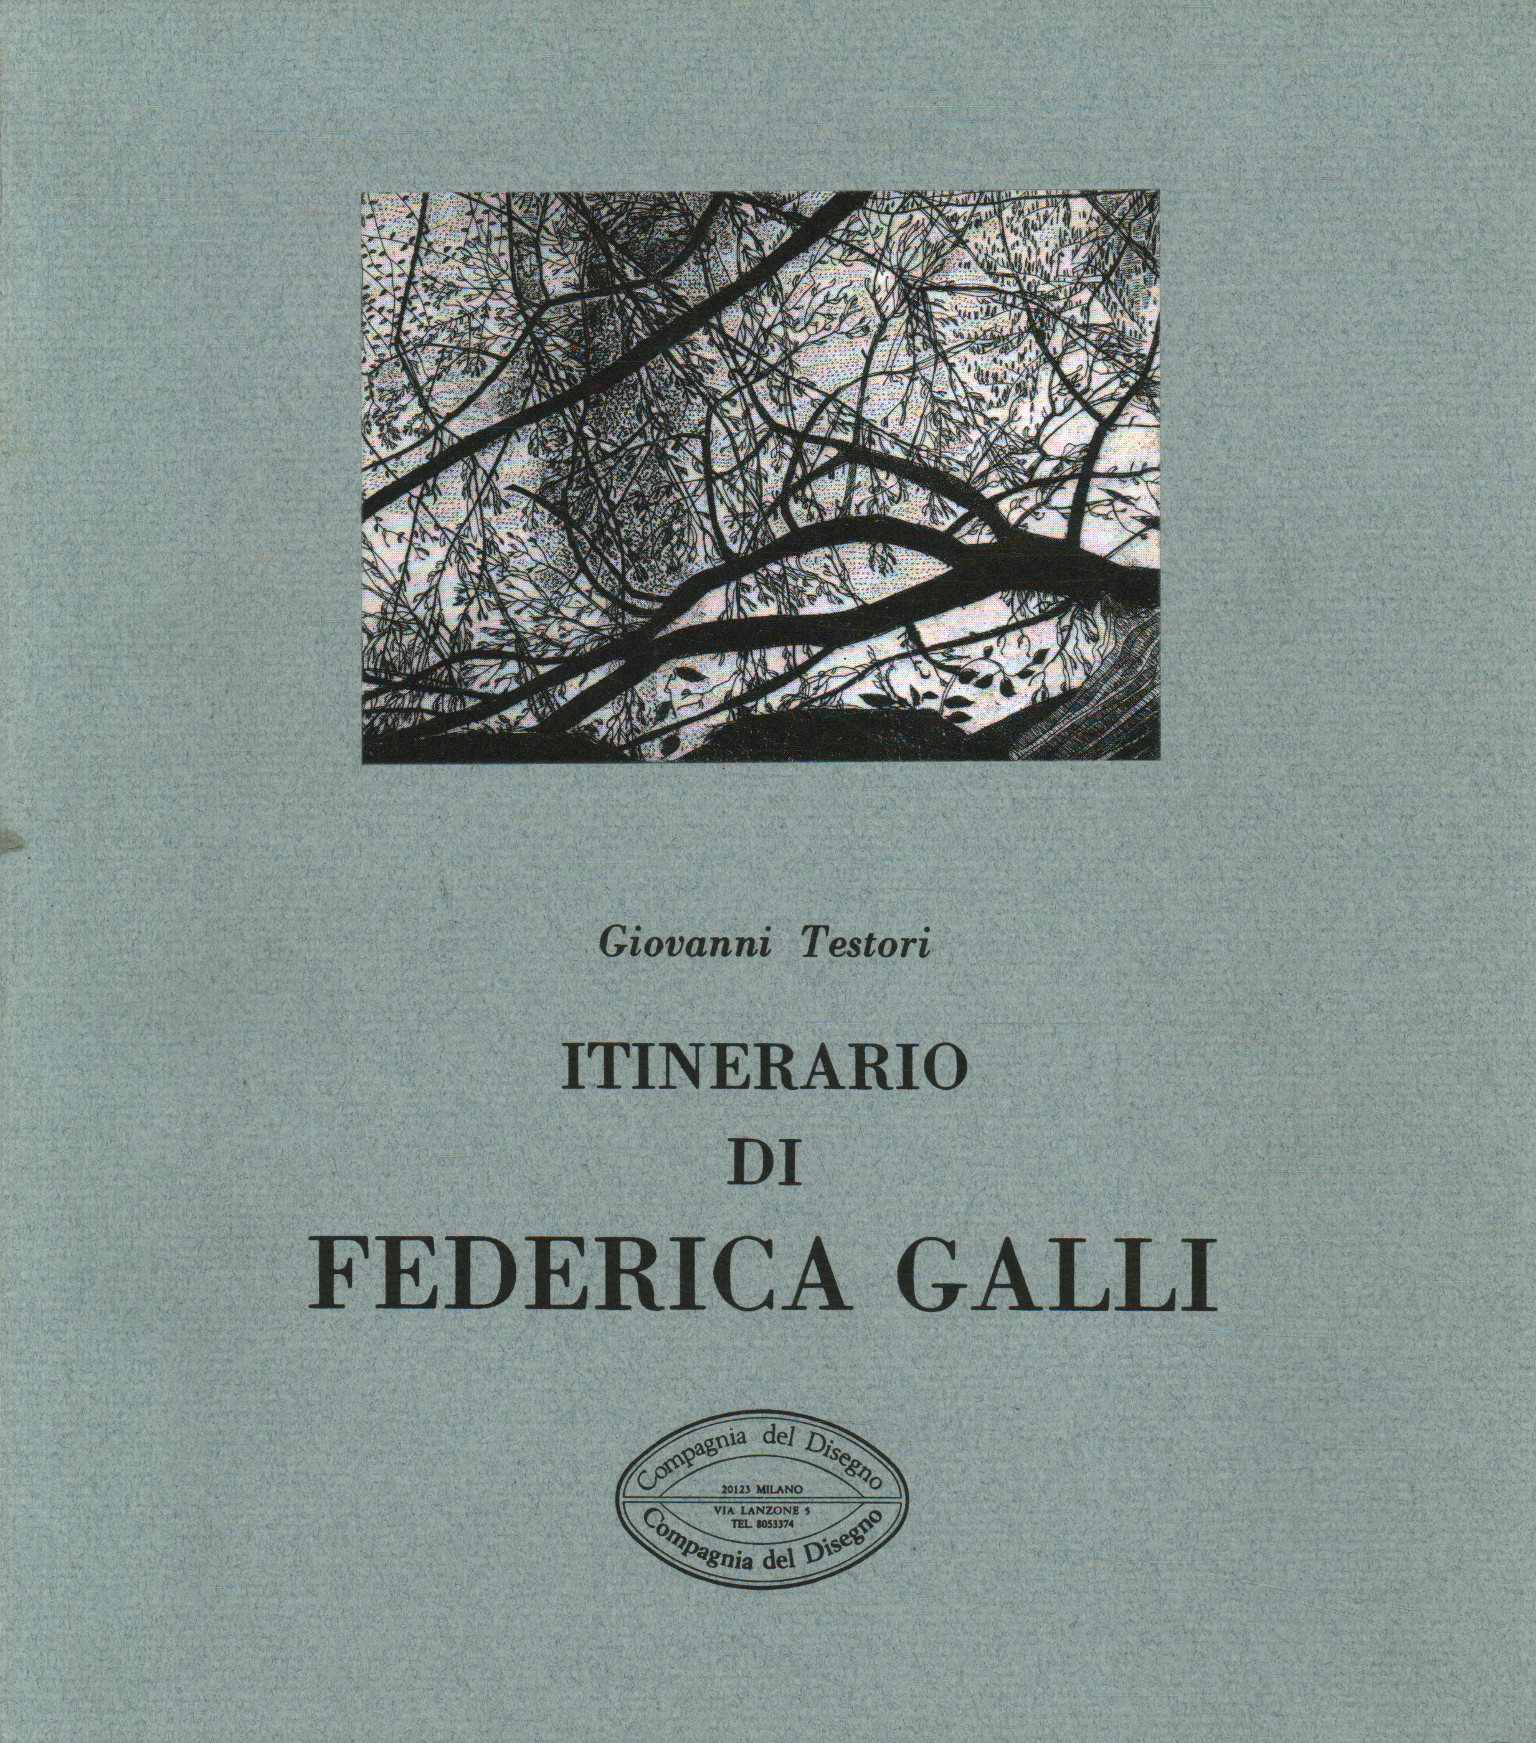 Federica Galli's itinerary